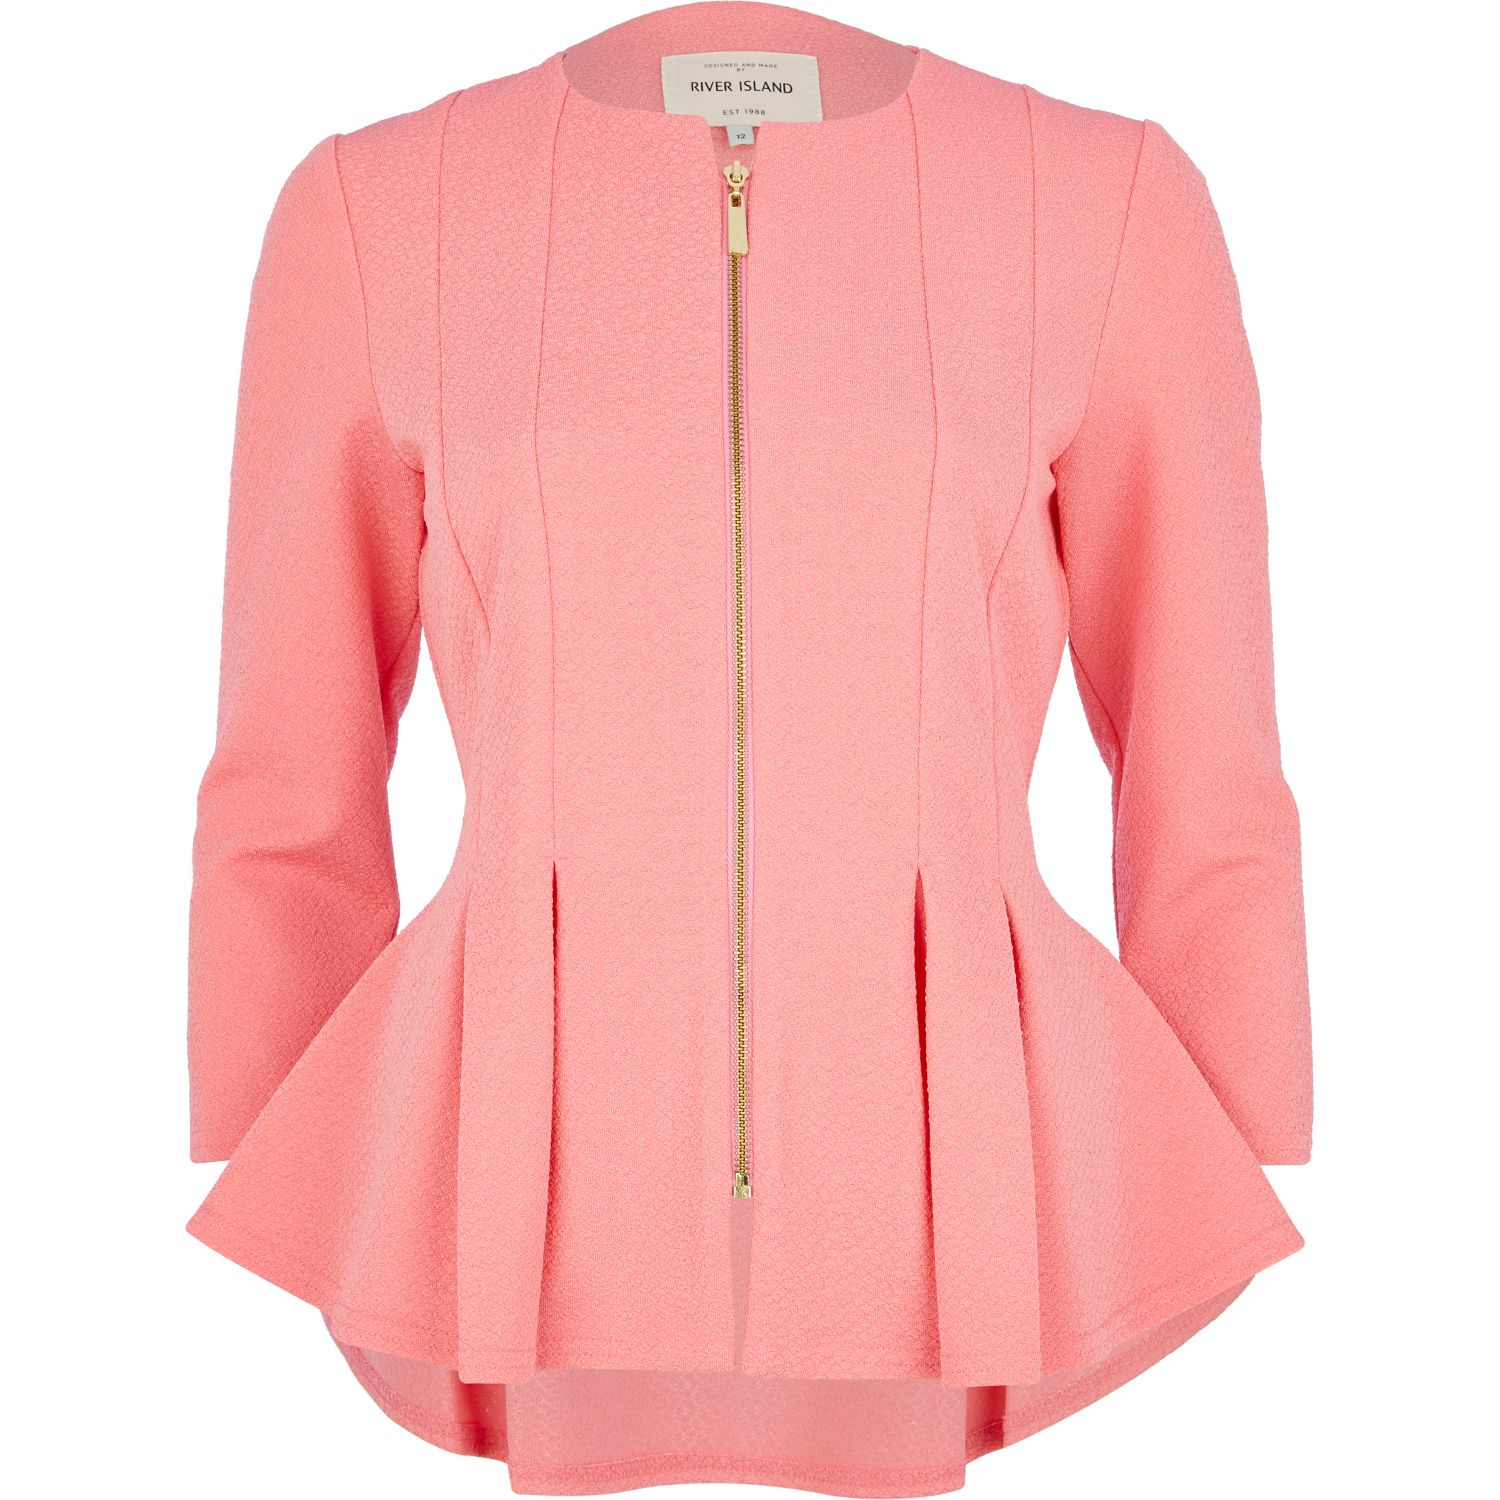 River Island Bright Pink Textured Jersey Peplum Jacket in Pink | Lyst